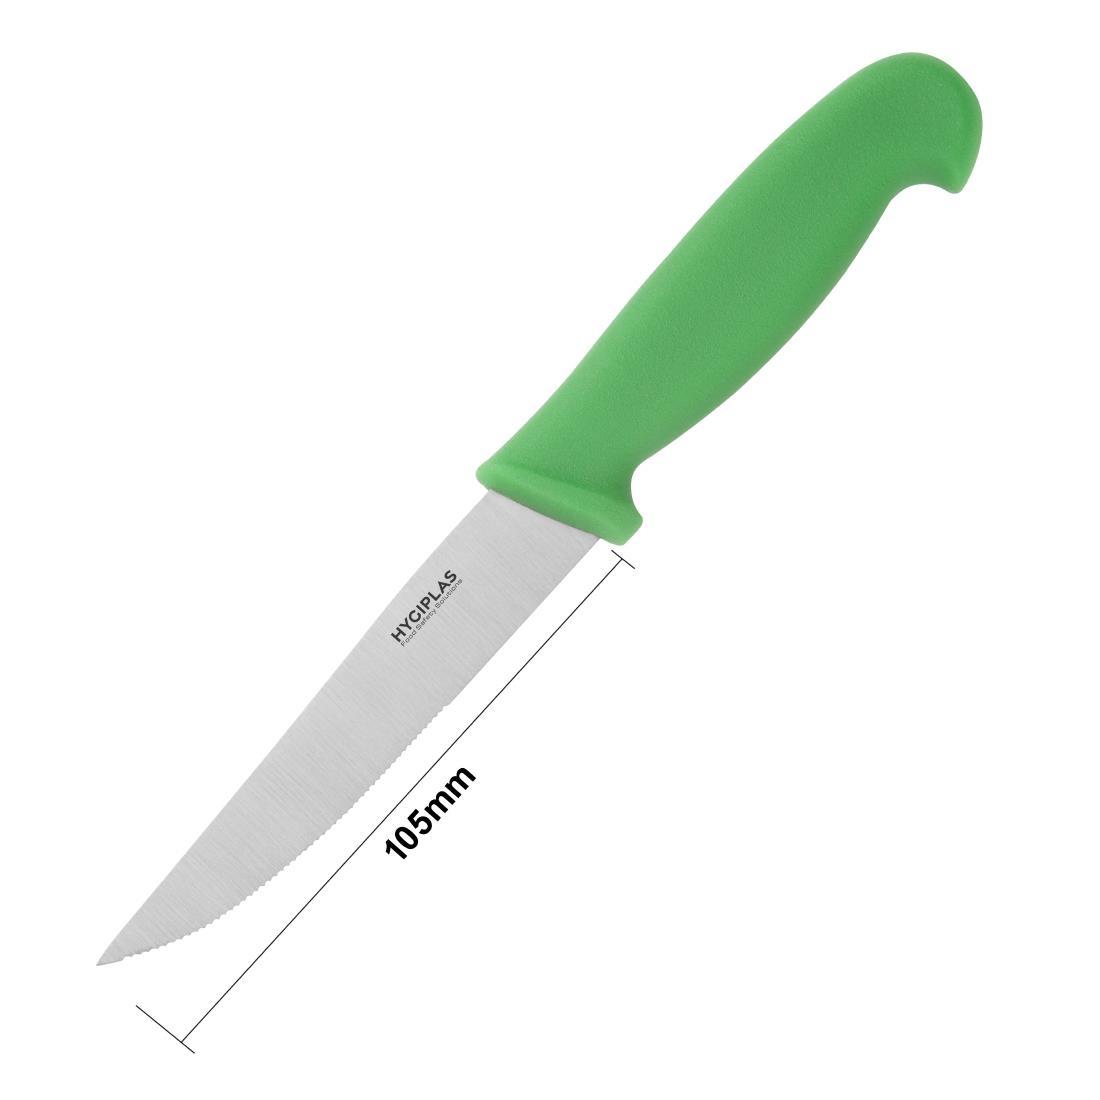 Hygiplas Serrated Vegetable Knife Green 10cm - C862  - 5